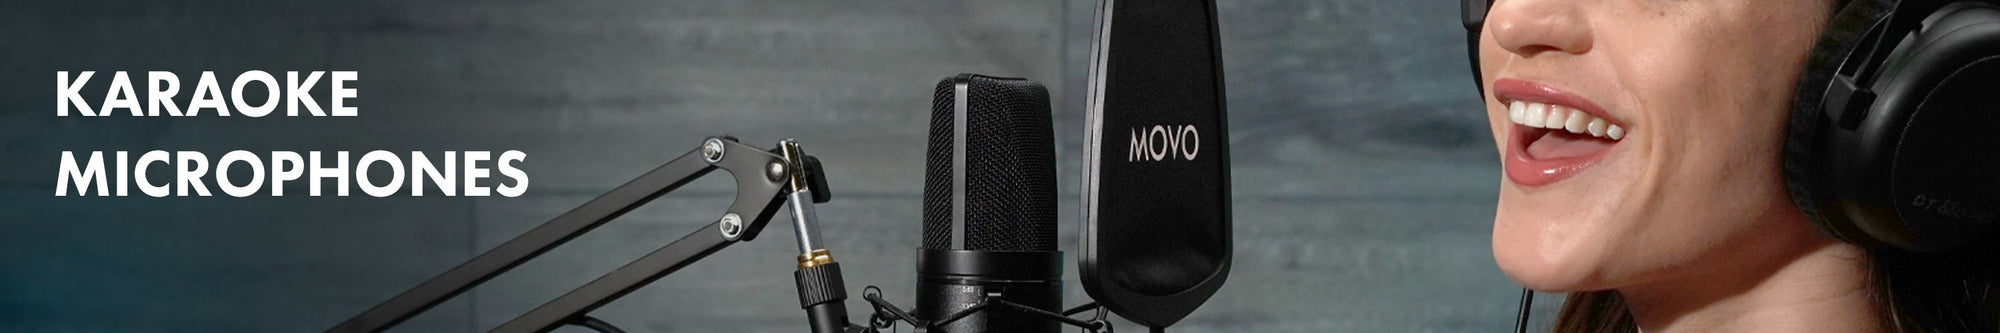 Karaoke Microphones - Movo